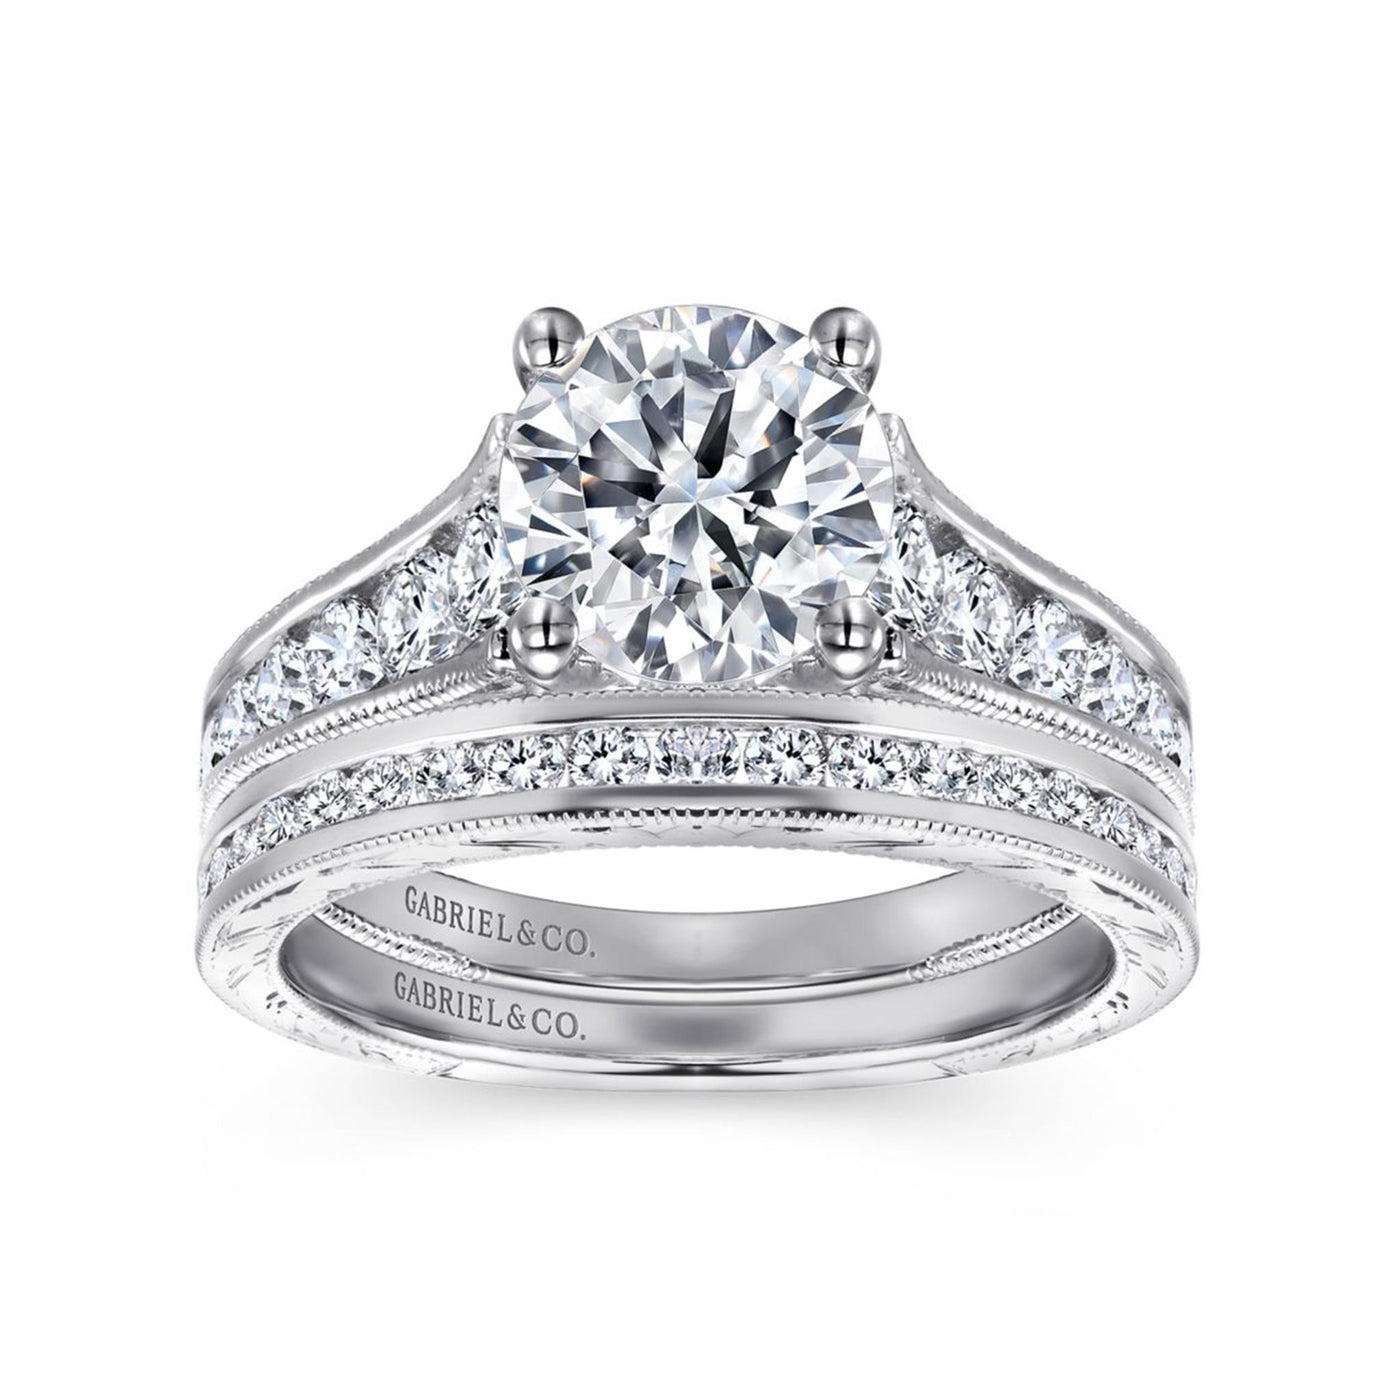 Gabriel 14K White Gold .75ctw 4 Prong Style Diamond Semi-Mount Engagement Ring